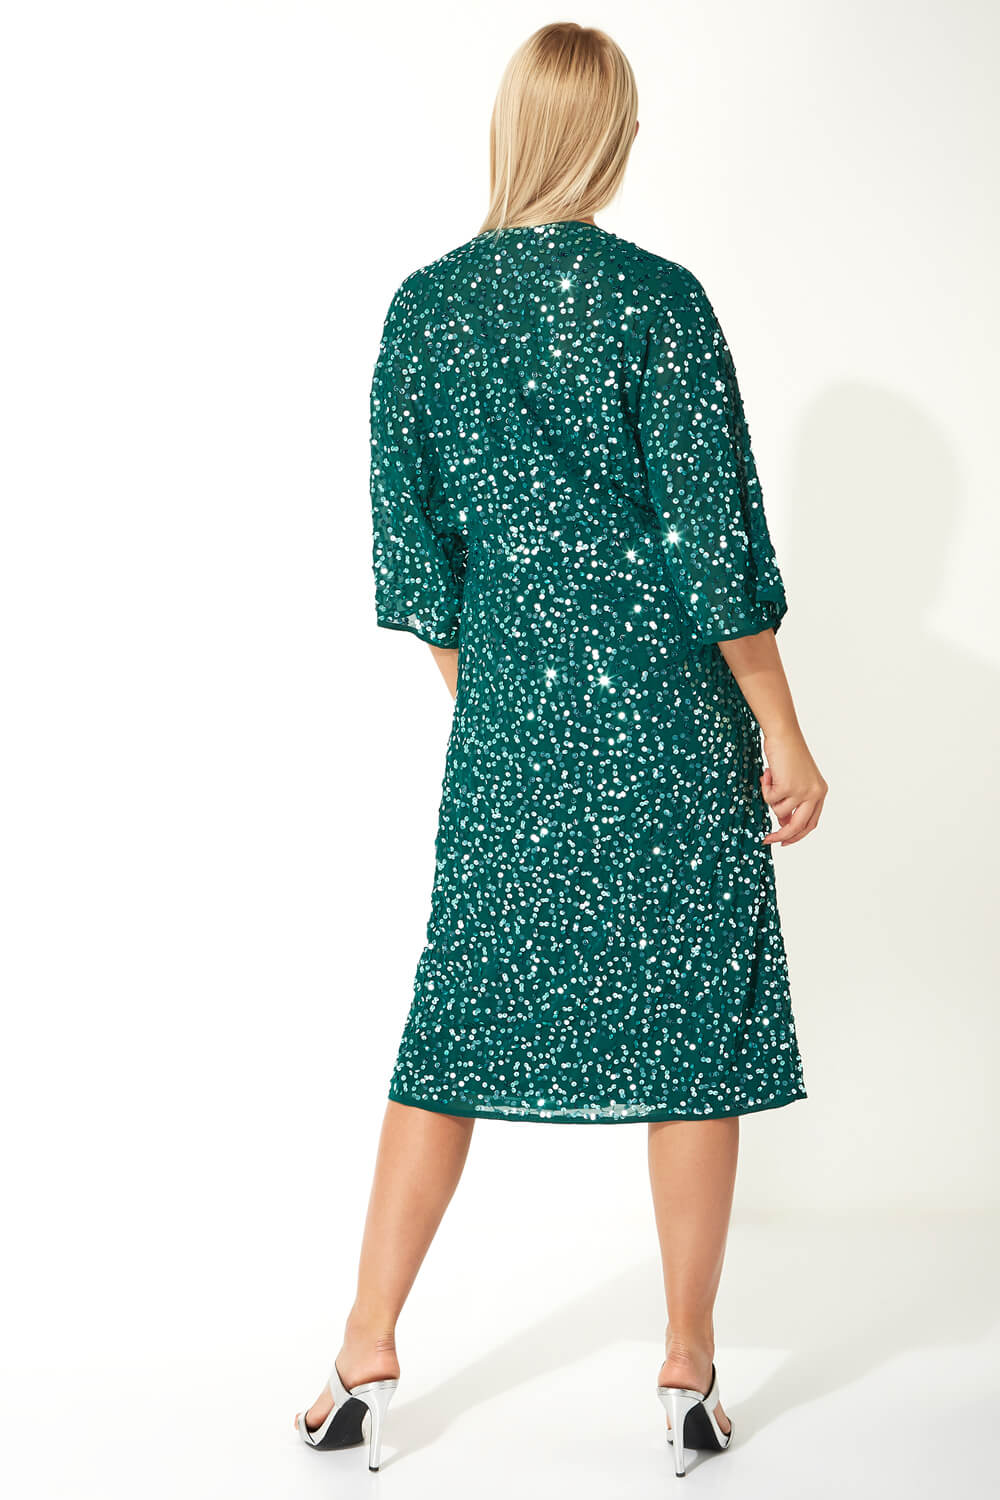 Green Twist Front Sequin Midi Dress, Image 2 of 4